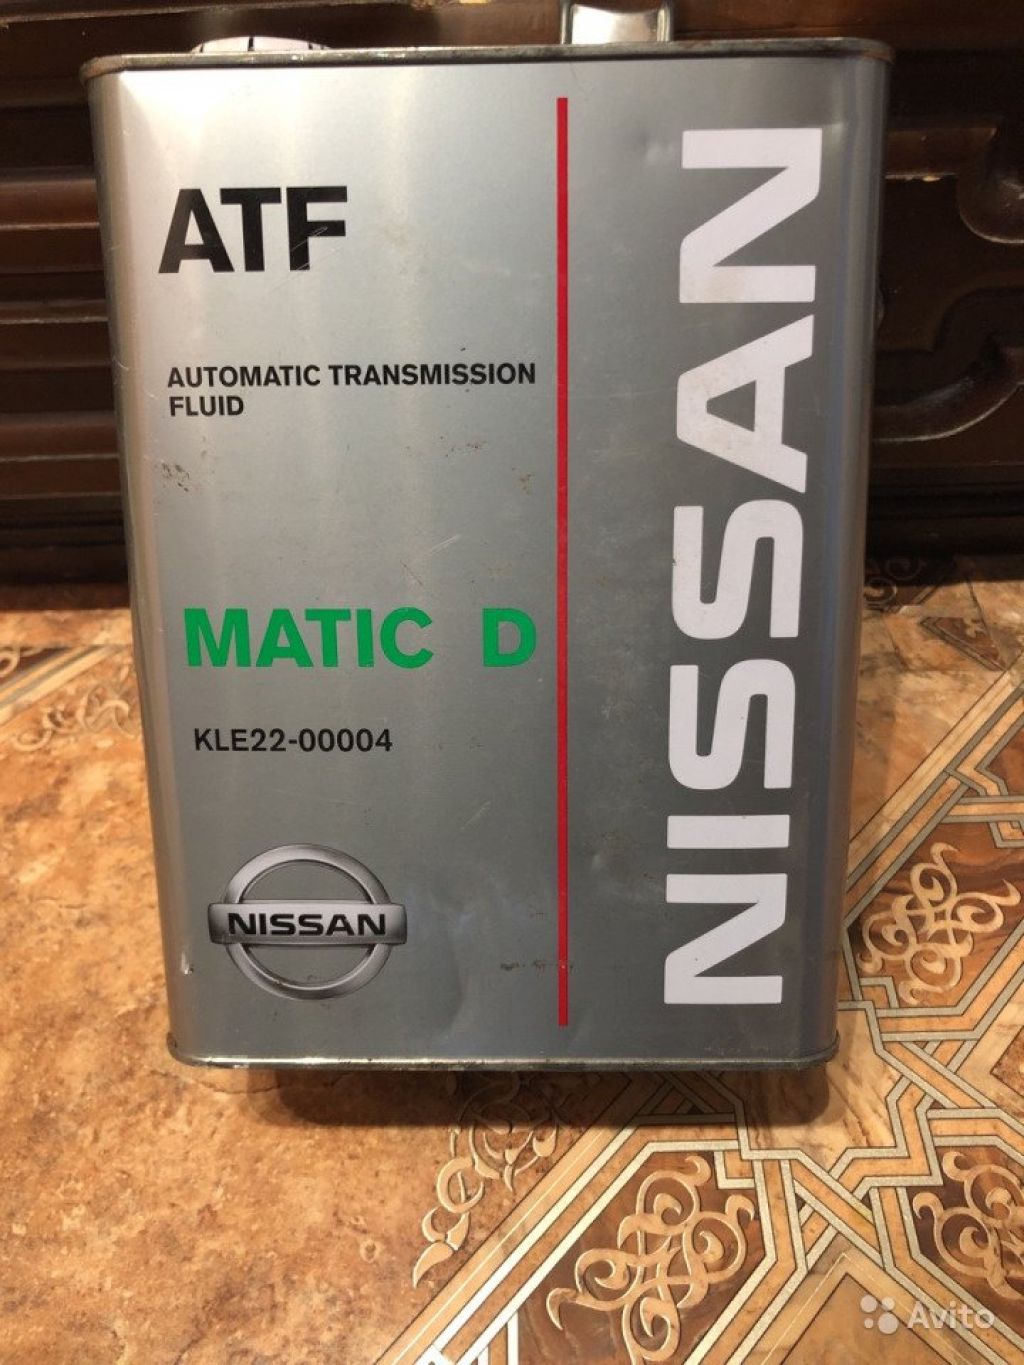 Atf matic j. Nissan ATF matic d (артикул 4л — kle22-00004). Nissan ATF matic d. Nissan kle22-00004. Nissan matic d ATF артикул.